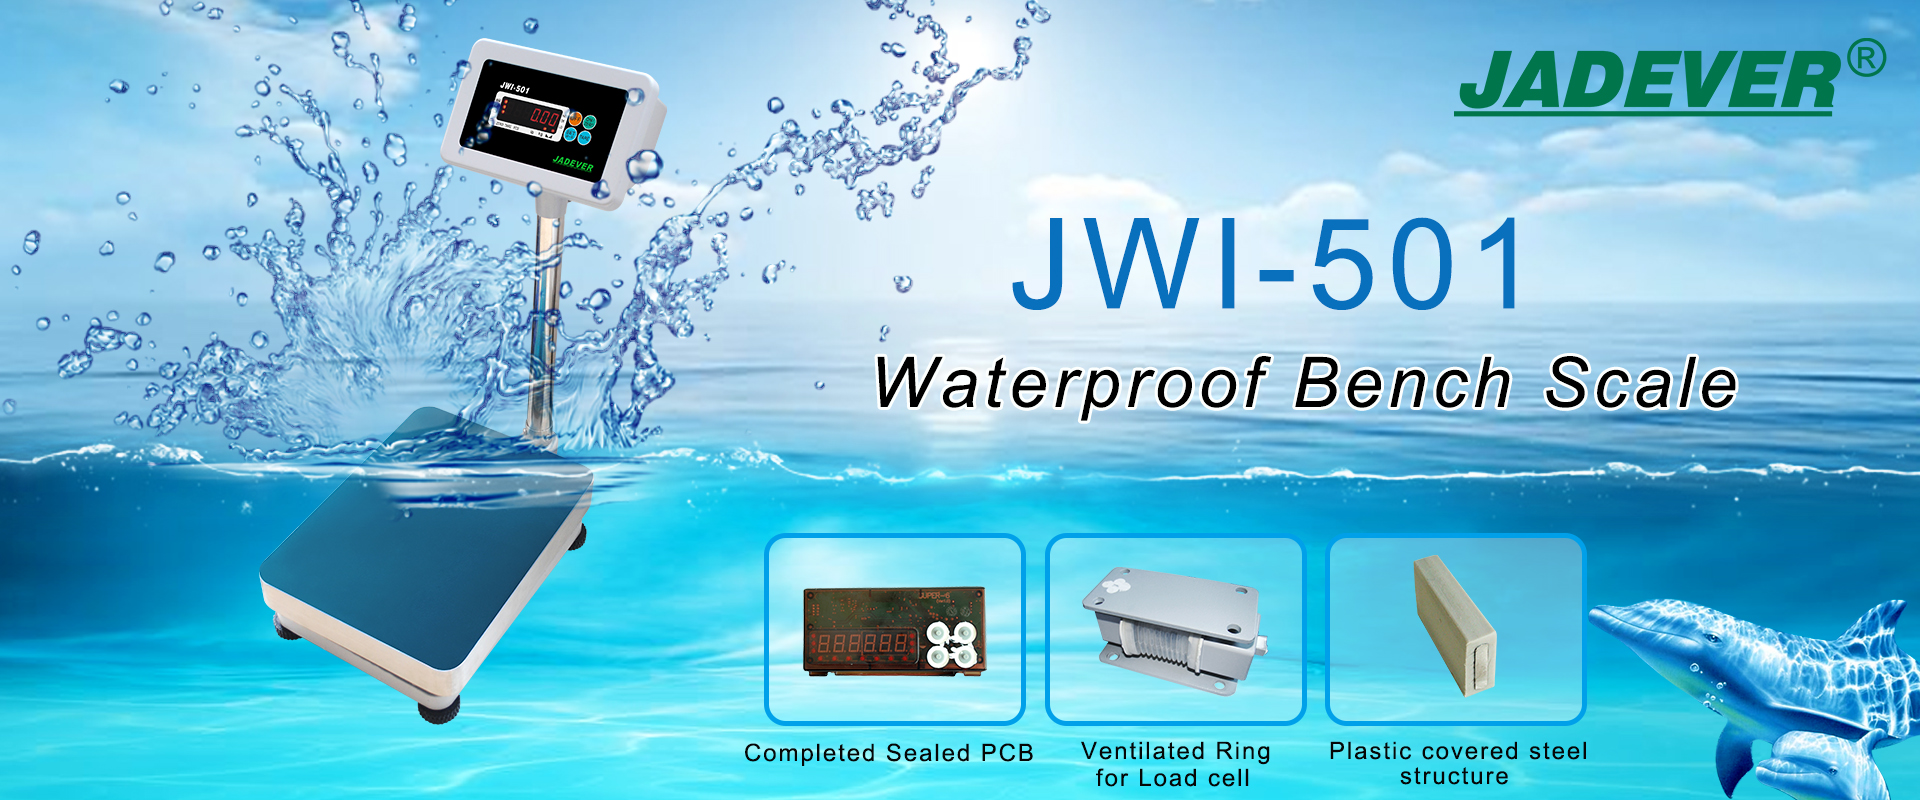 Jadever JWI-501 waterproof bench scale for seafood IP68